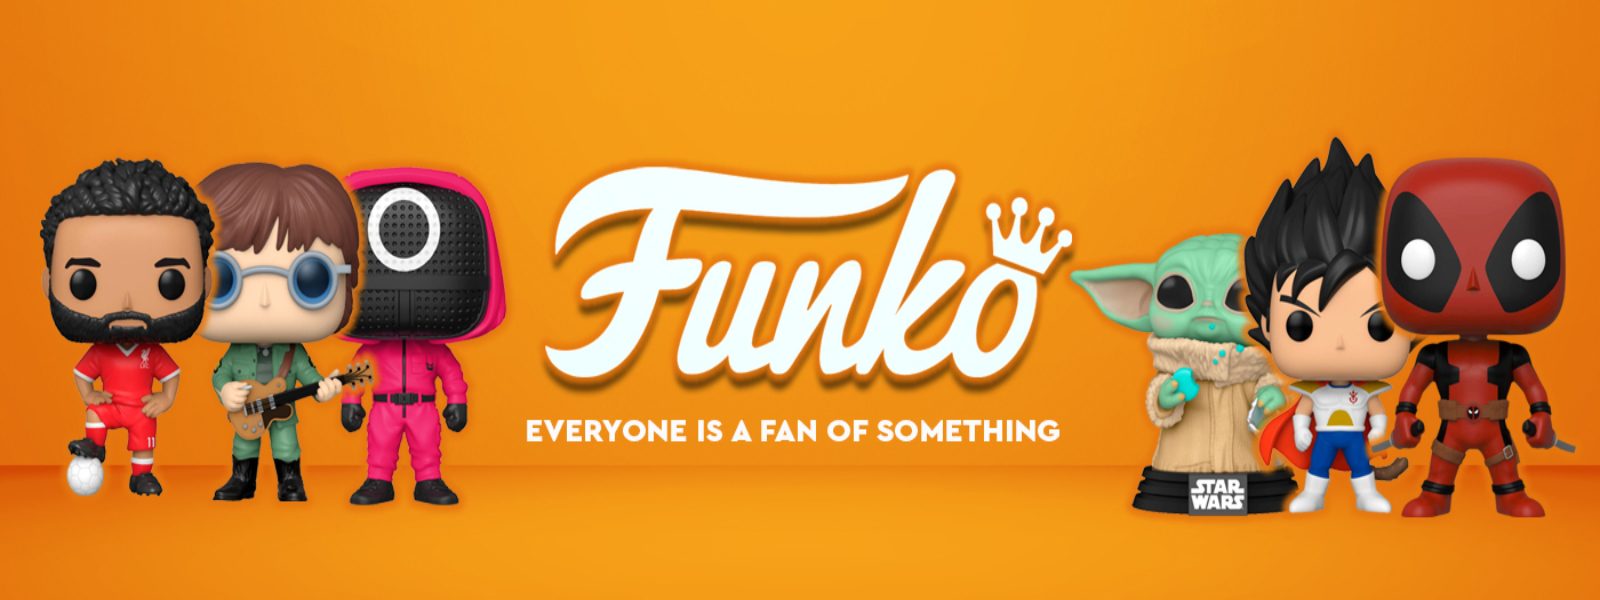 Funko banner